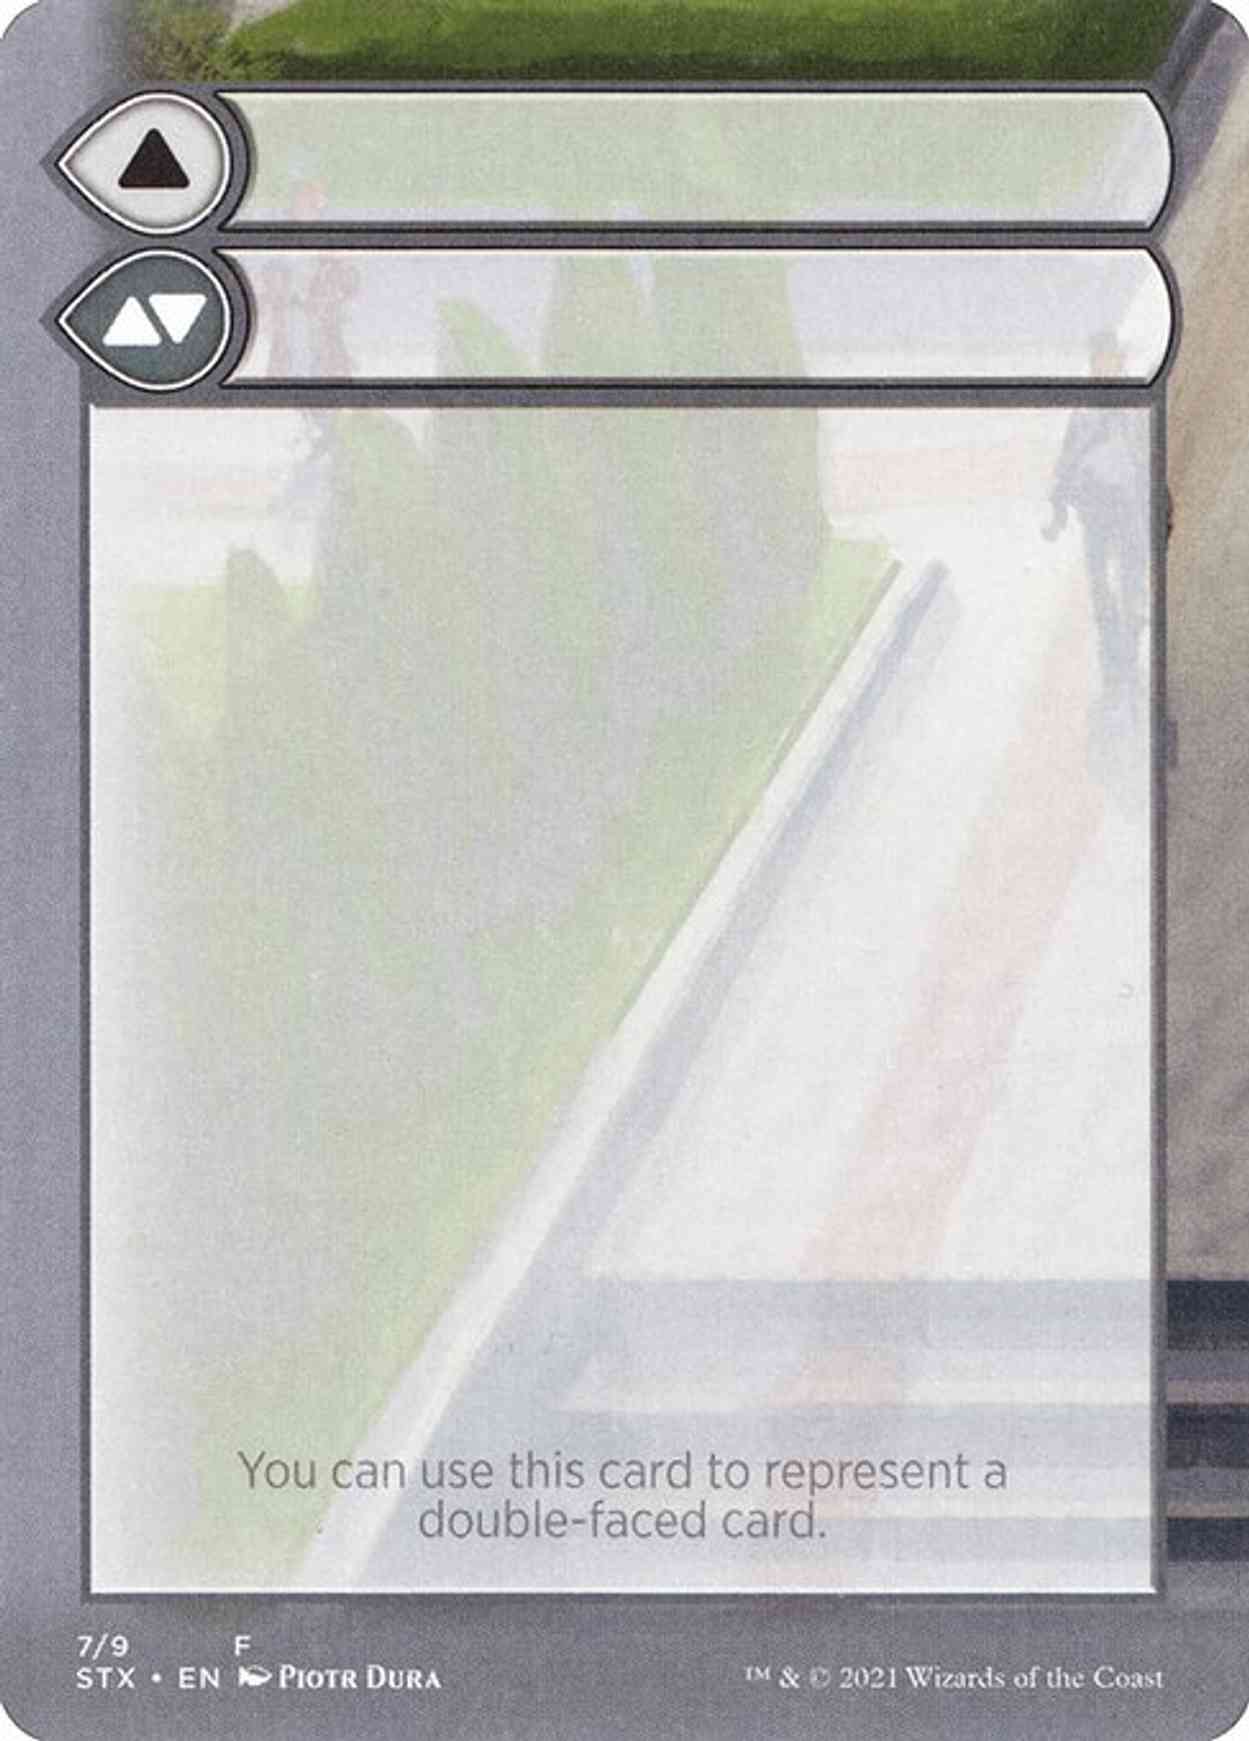 Helper Card (7/9) magic card front